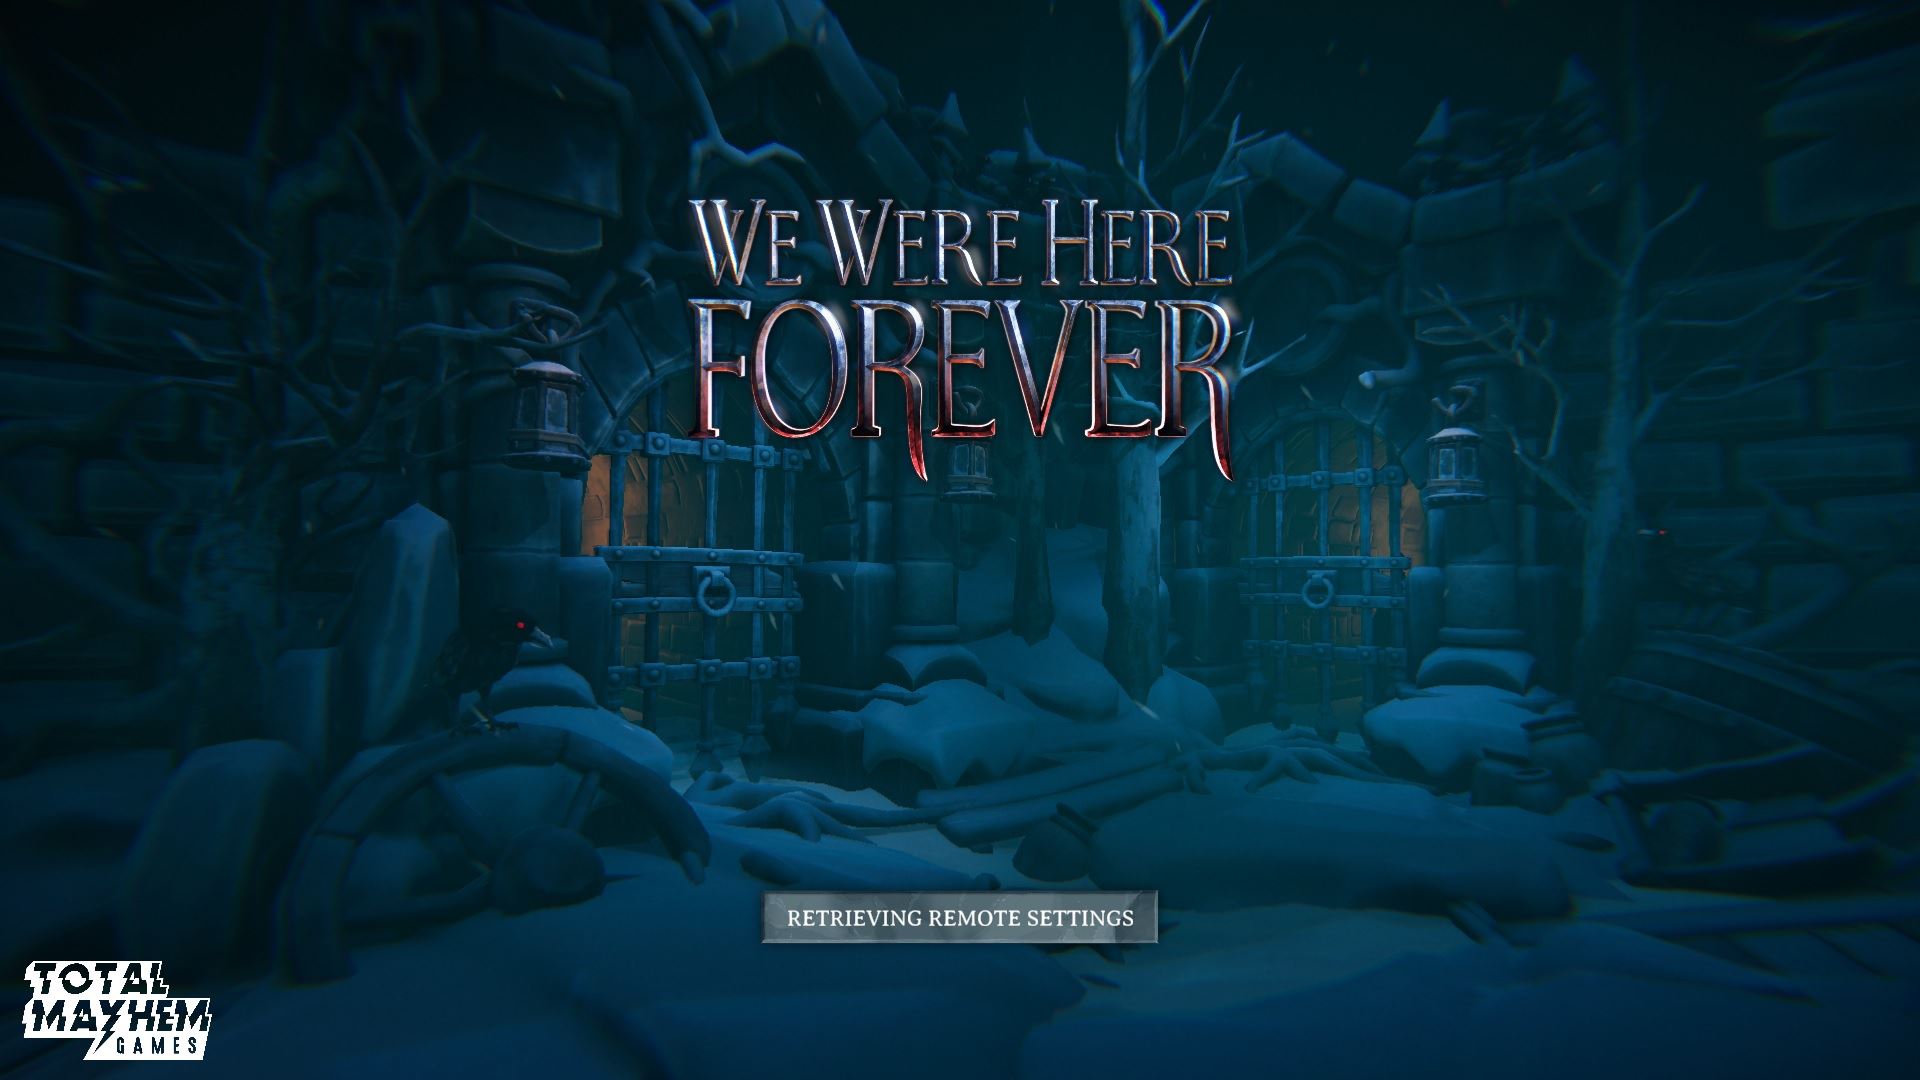 [We Where Here Forever] Game bị treo ở màn hình Retrieving Remote Settings